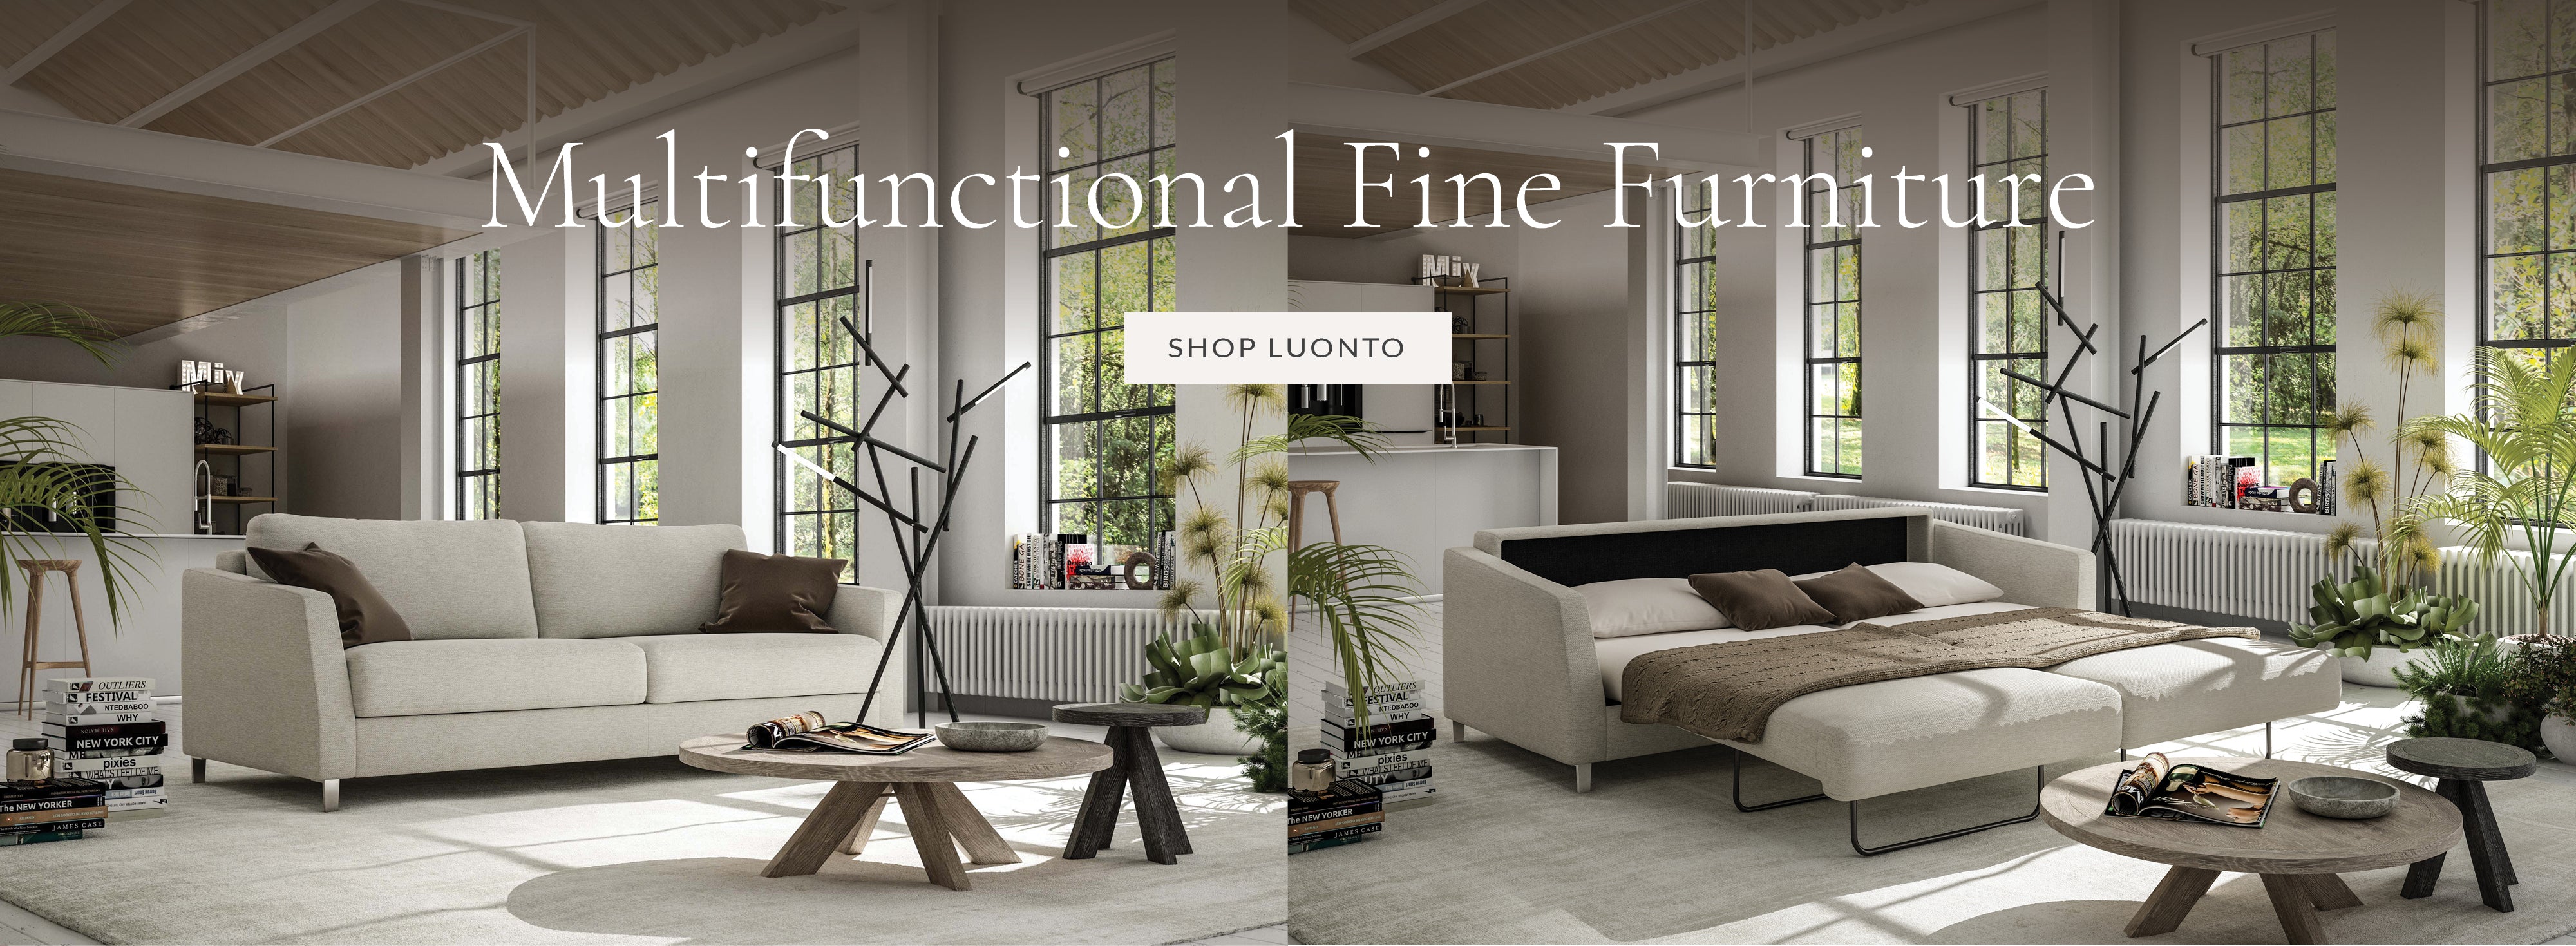 Multifunctional Fine Furniture